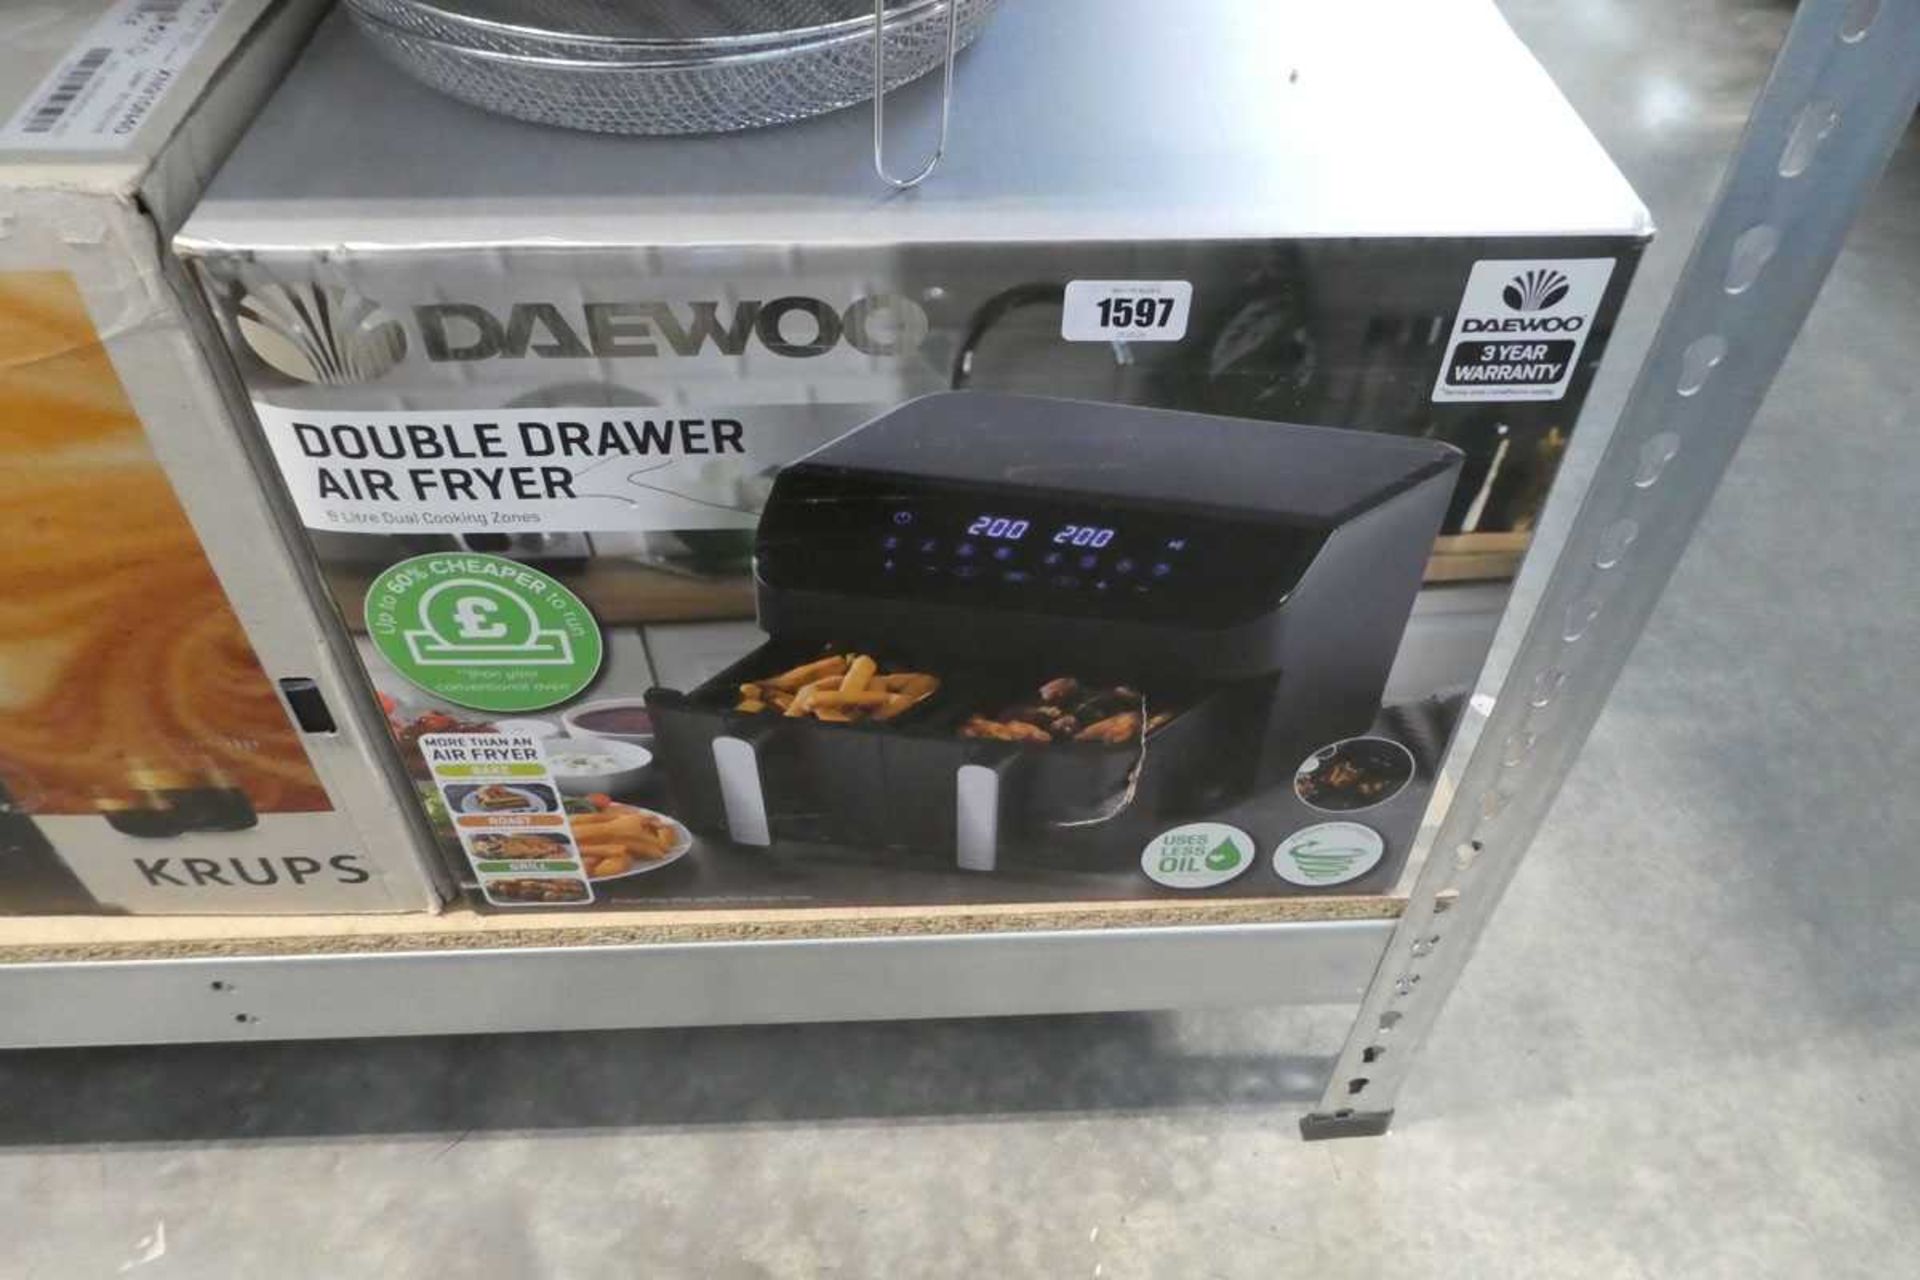 Daewoo 9L double drawer air fryer